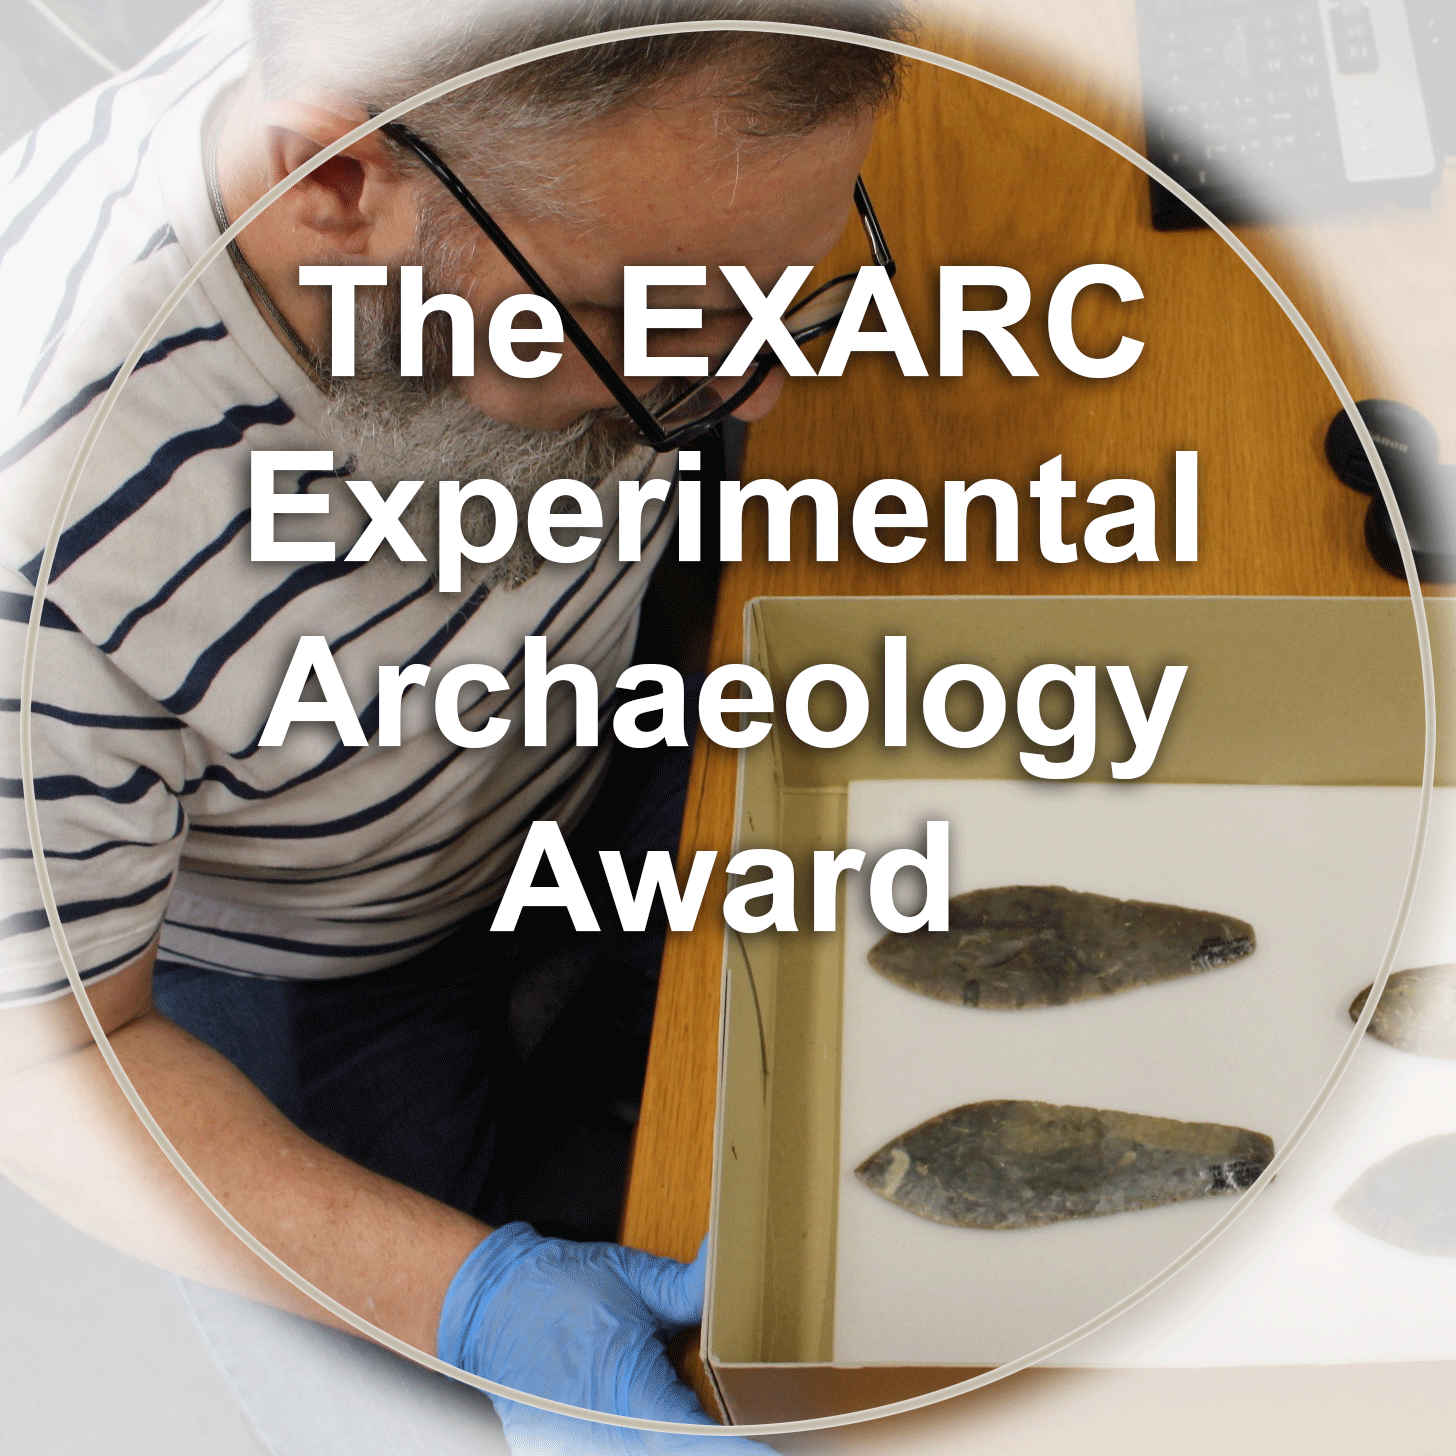 The EXARC Experimental Archaeology Award